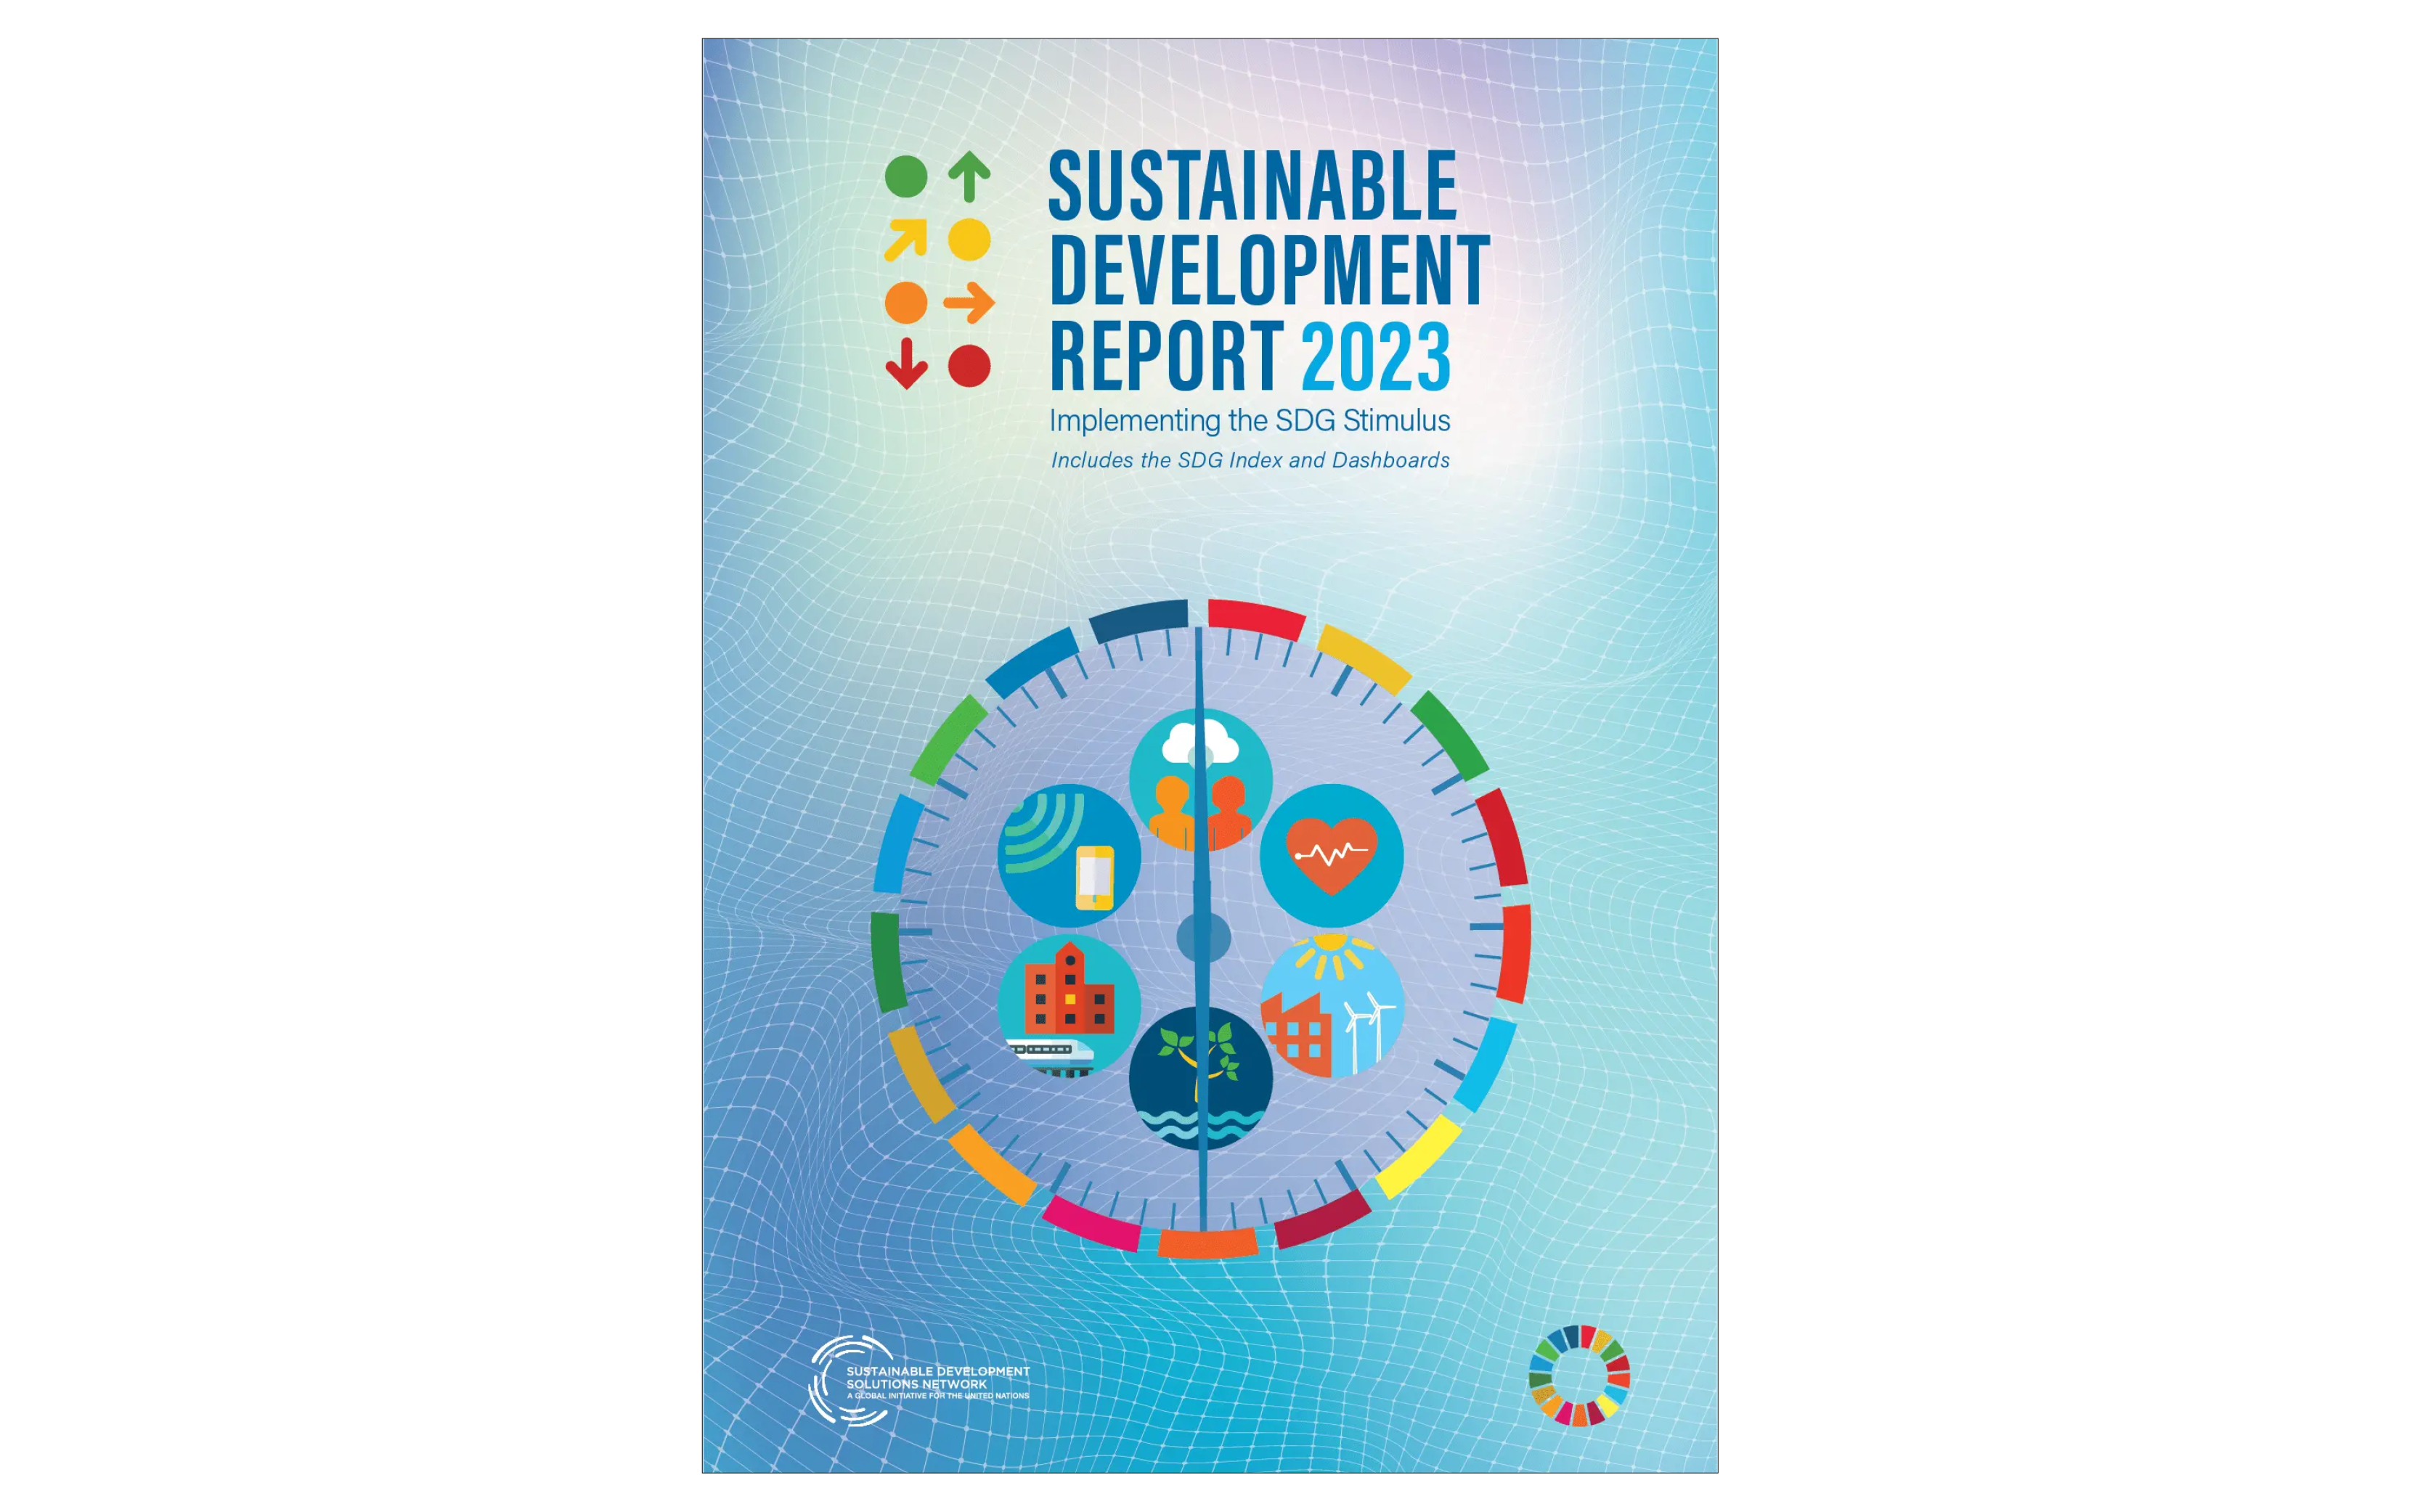 Sustainable Development Report